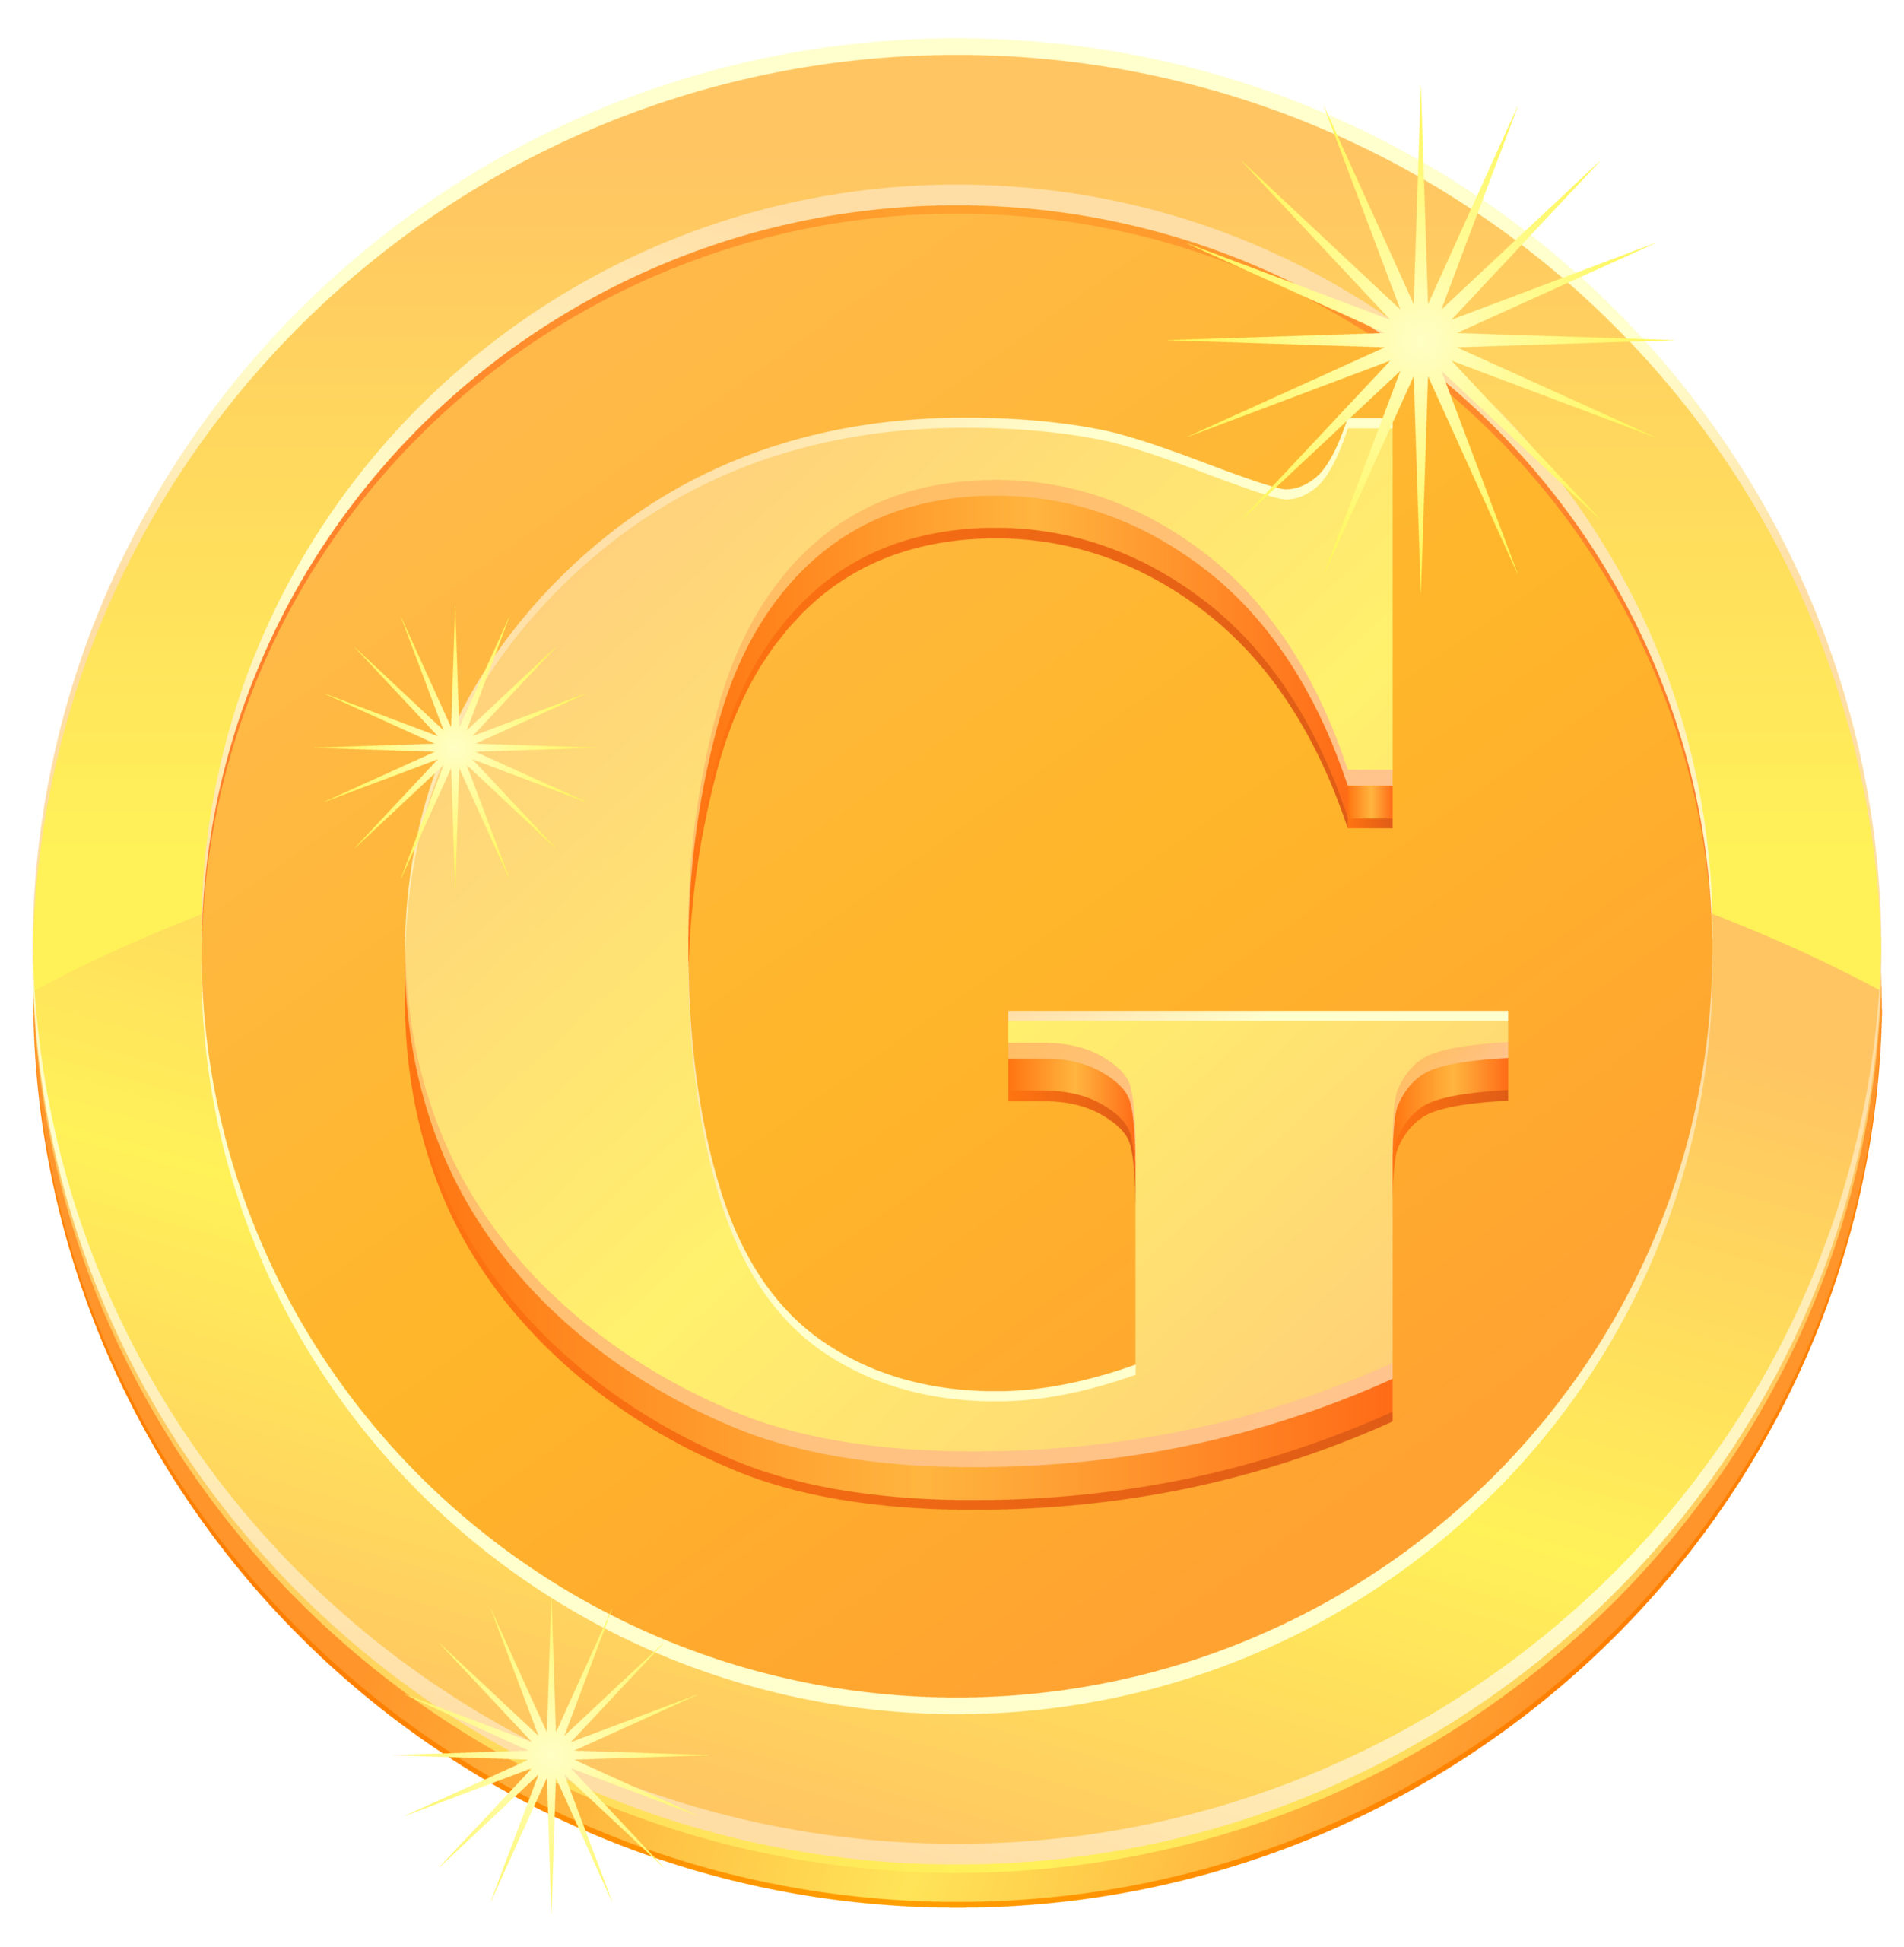 CrossTower initiates G-Coin digital gold token in United States - Financial Regulation News